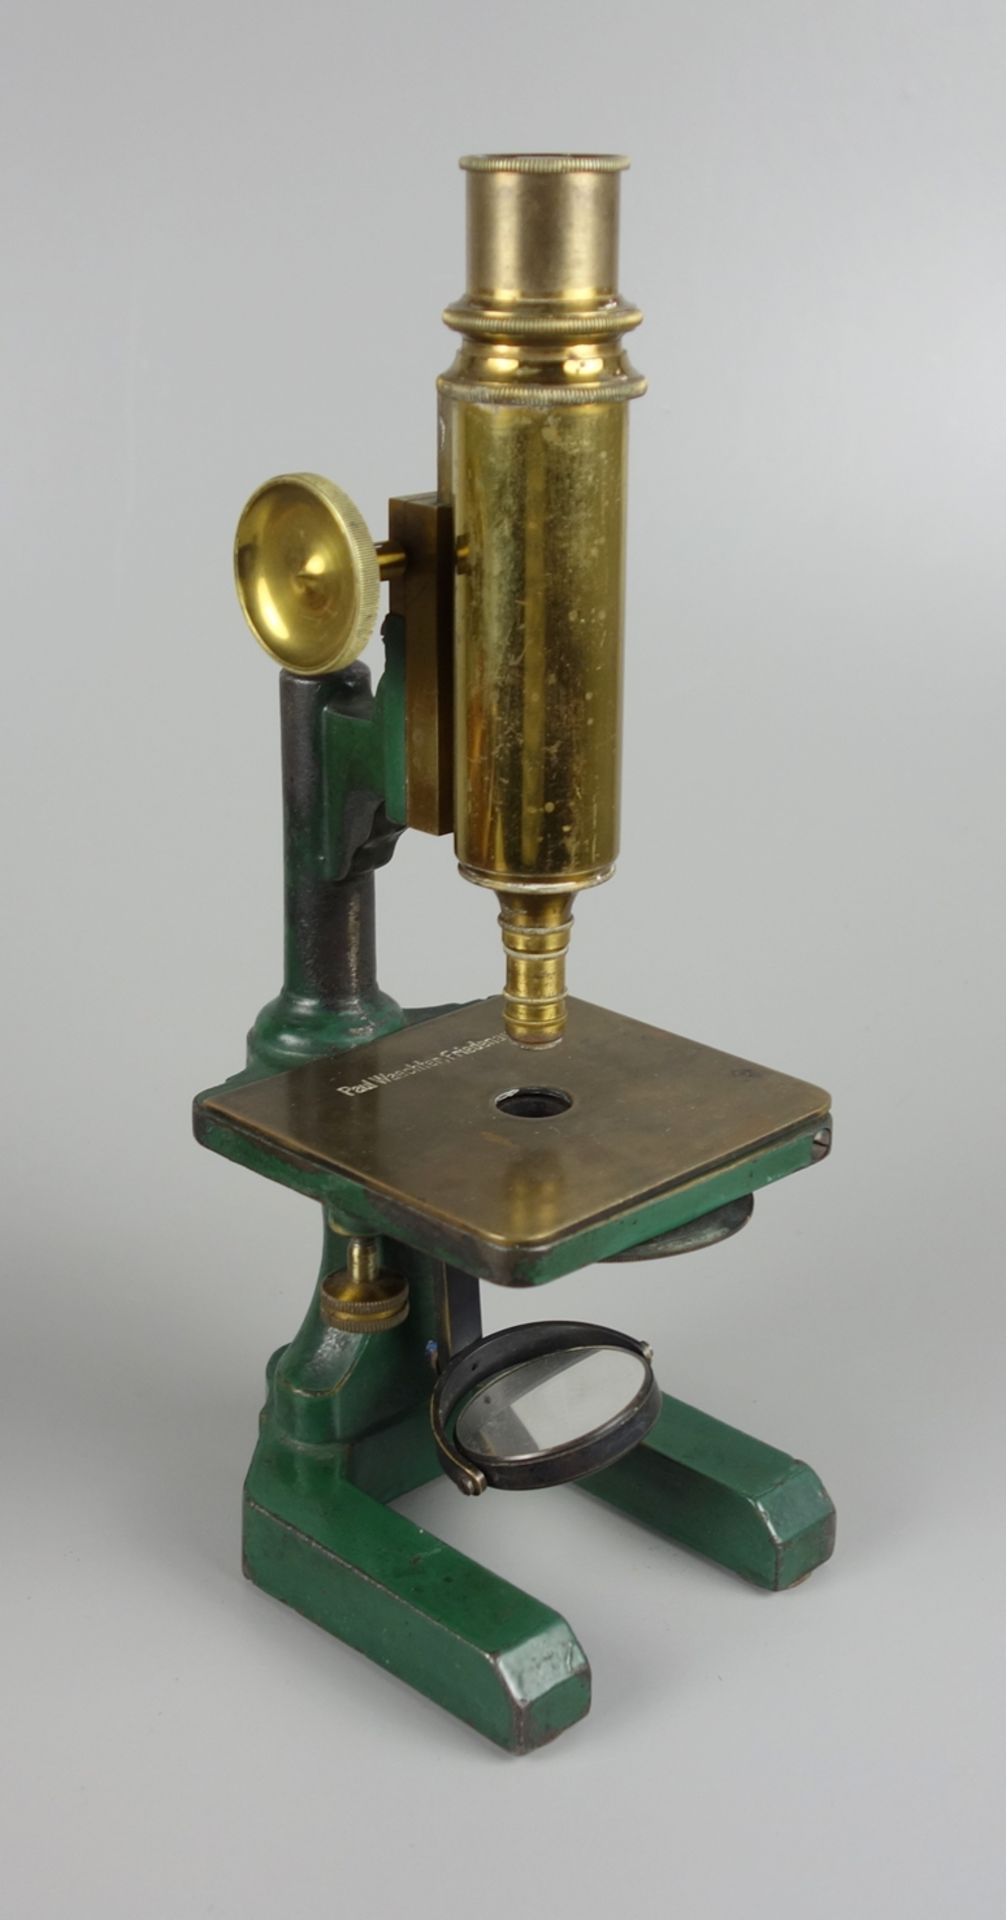 Microscope, N° Va, Paul Waechter, Friedenau near Berlin, around 1890